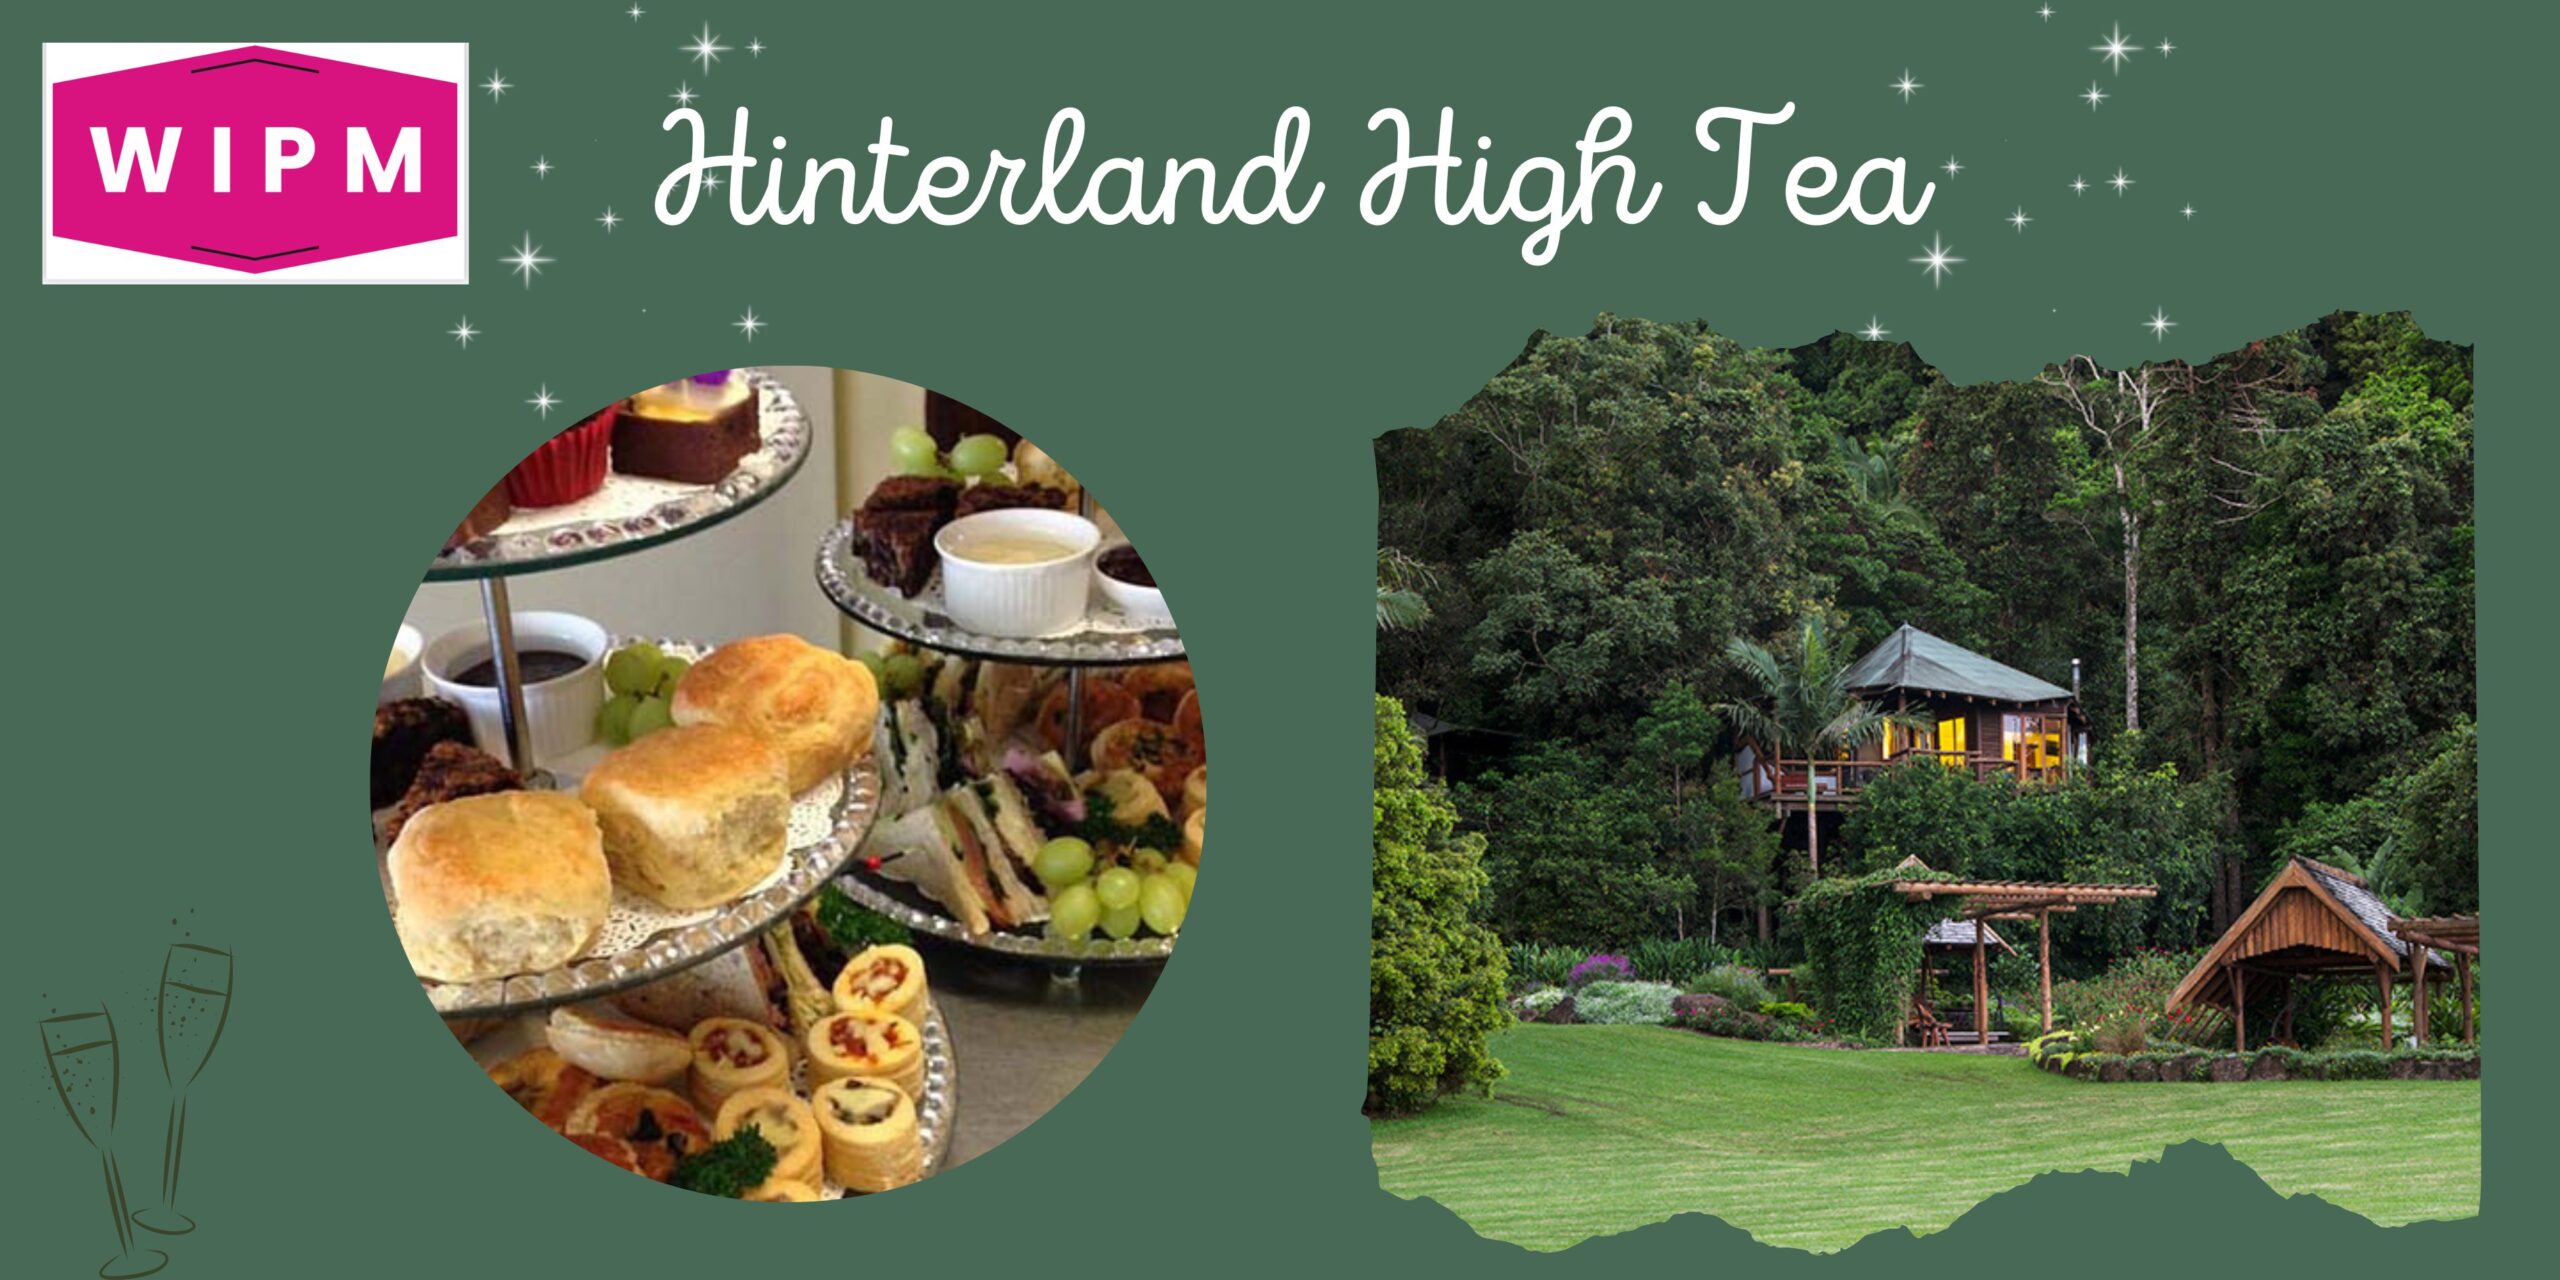 WIPM Partner Event - Coast to Hinterland High Tea